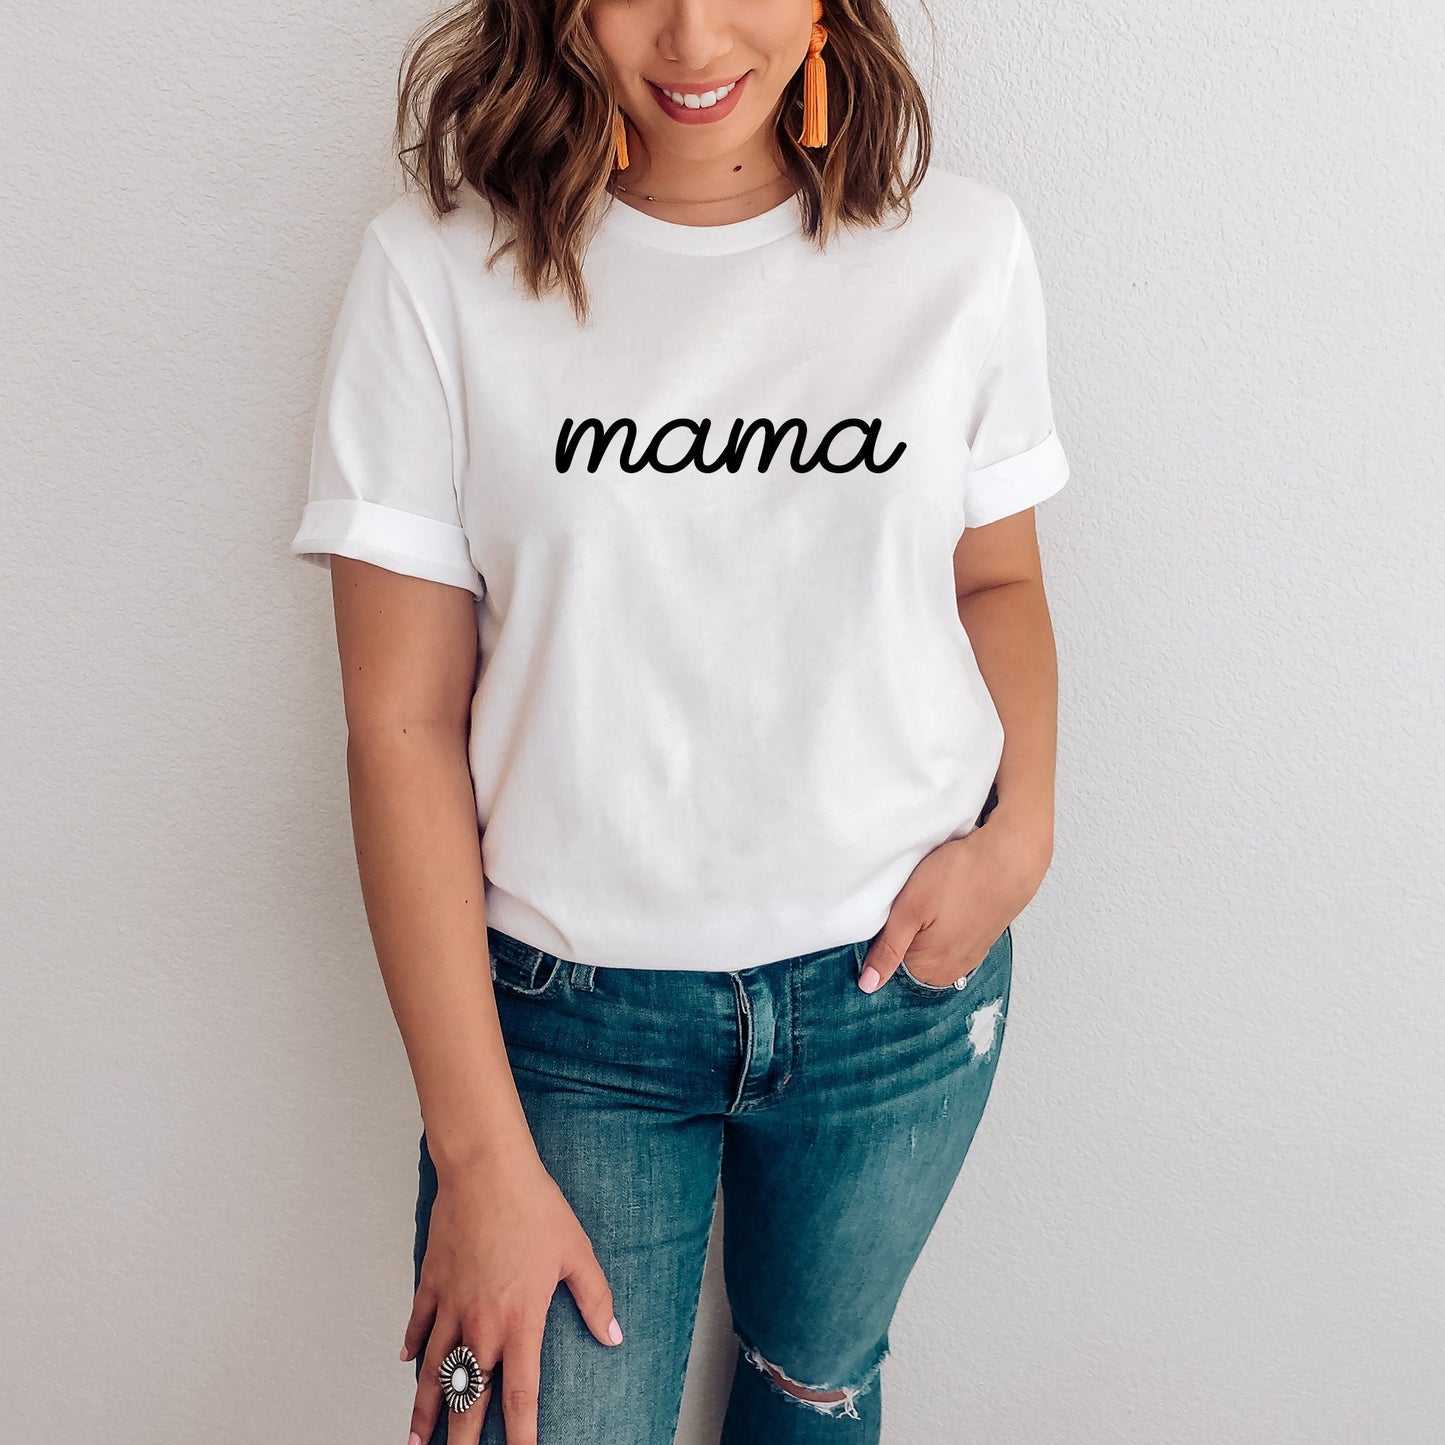 Mothers Day Gift, Mama Shirt, Mom Shirts, Mom-life Shirt, Shirts for Moms, Trendy Mom T-Shirts, Cool Mom Shirts, Shirts for Moms